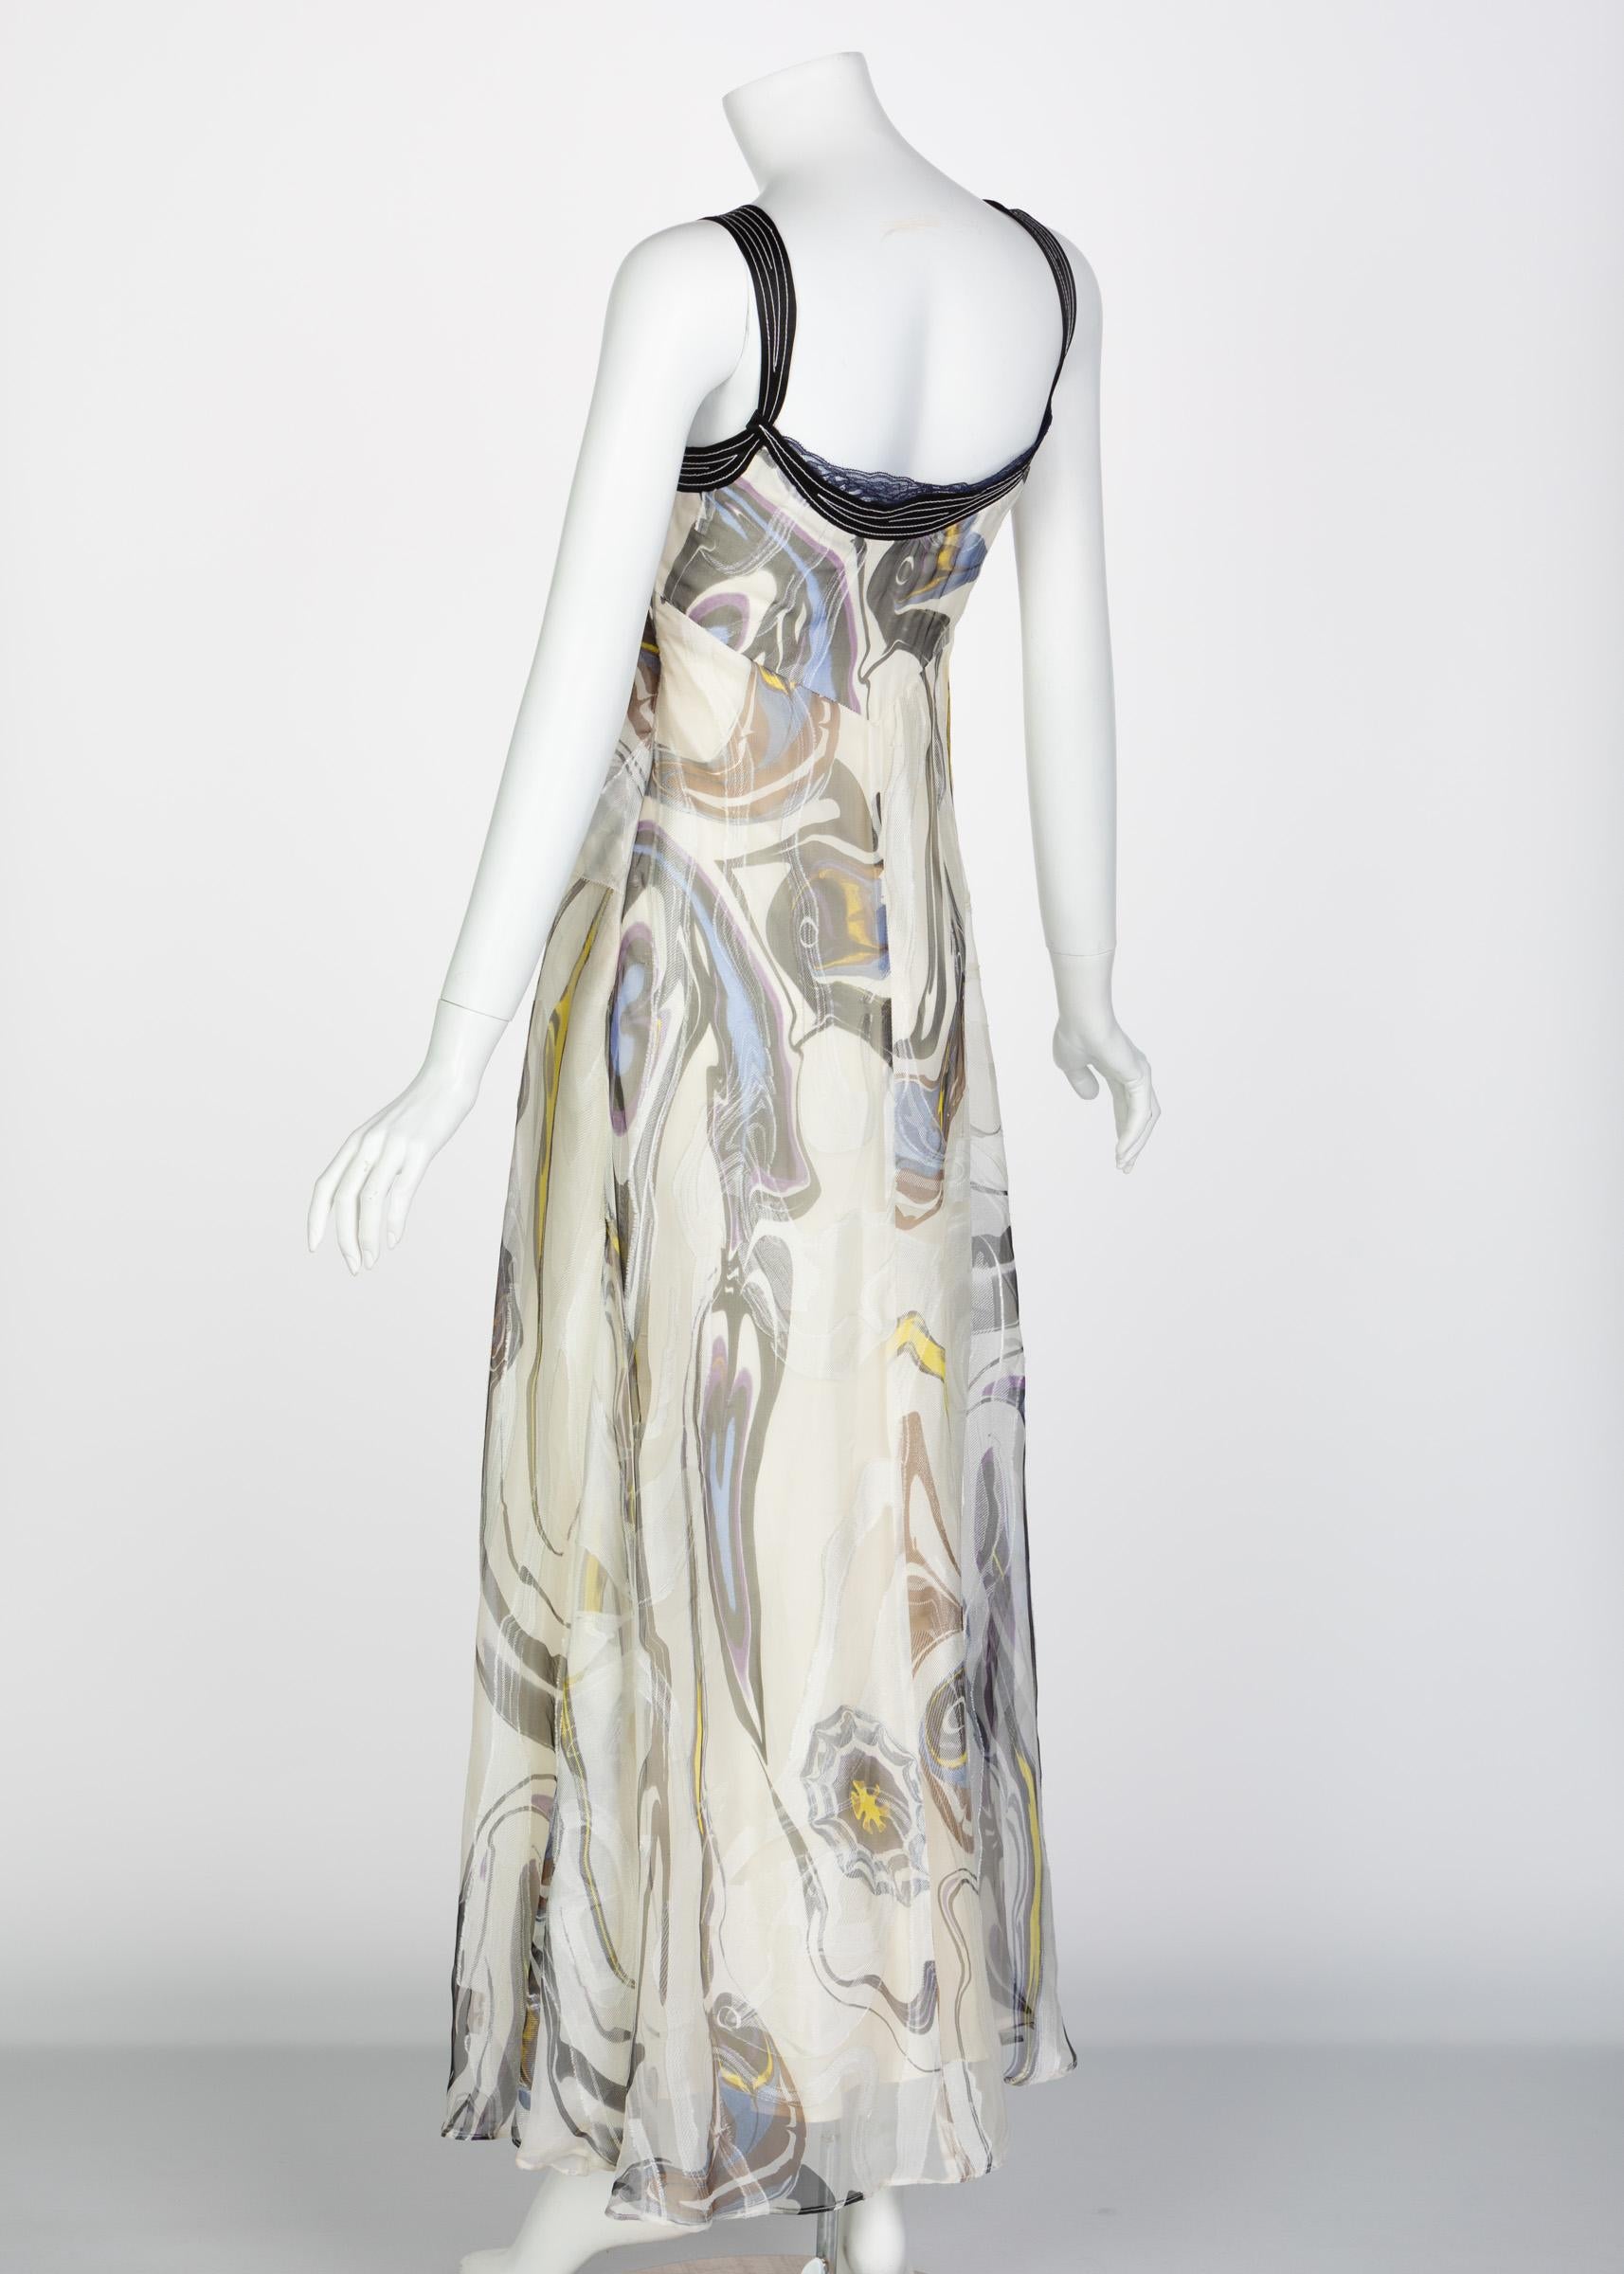 Women's Nina Ricci Sleeveless Swirl Print Silk Maxi Dress  For Sale